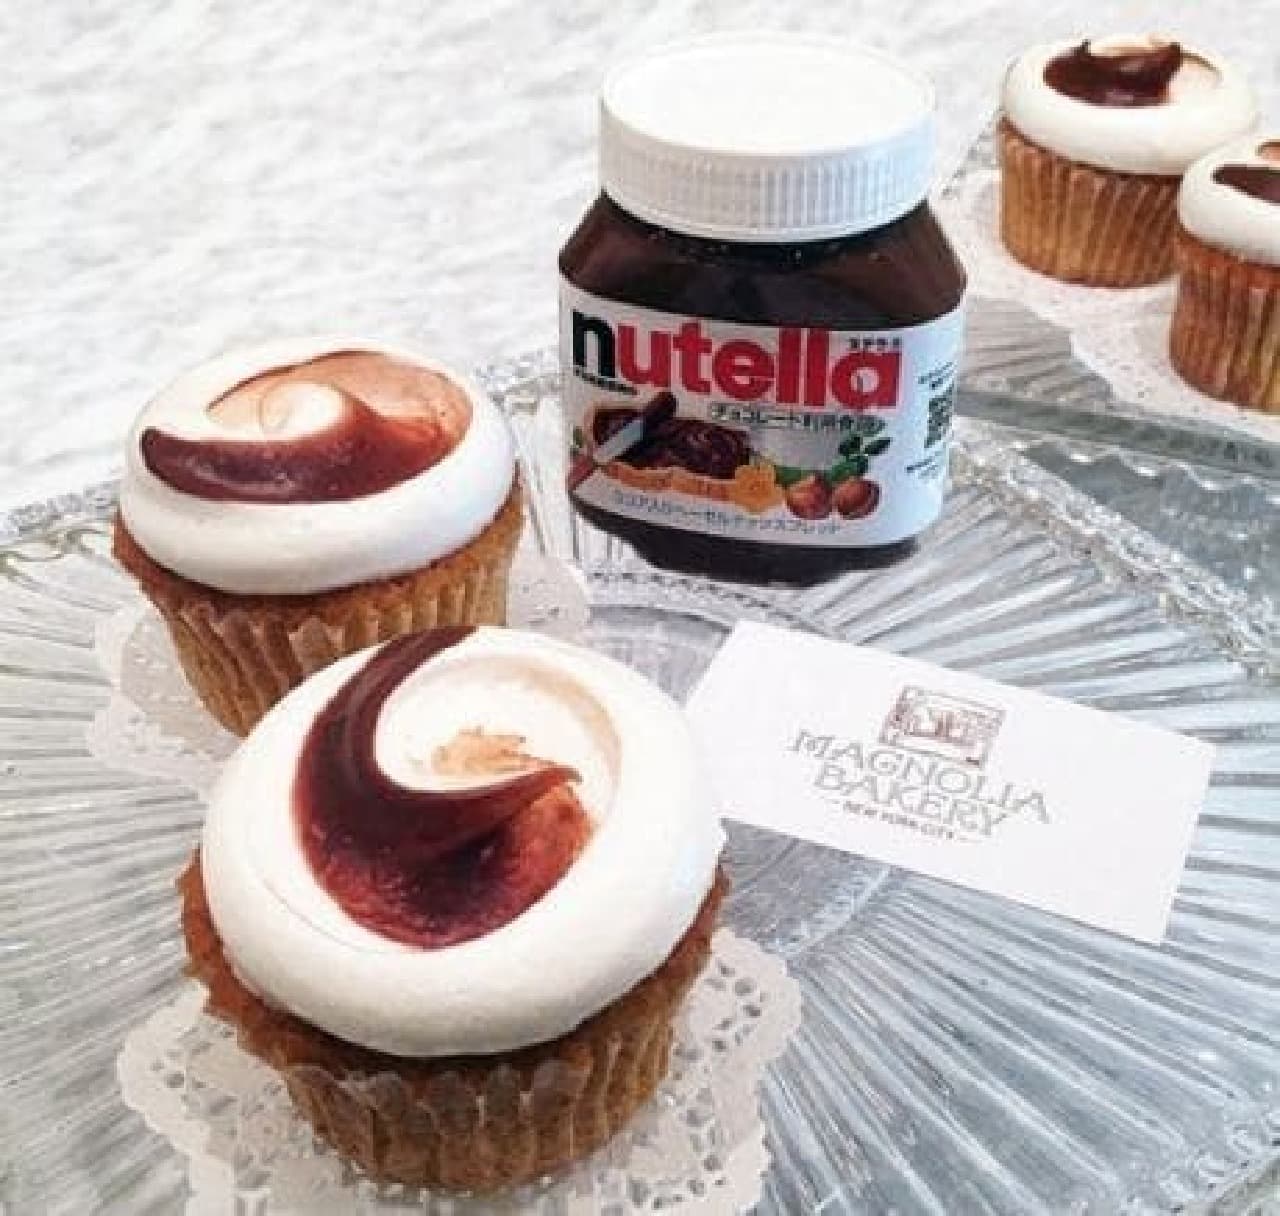 Magnolia Bakery "Nutella Cupcake"